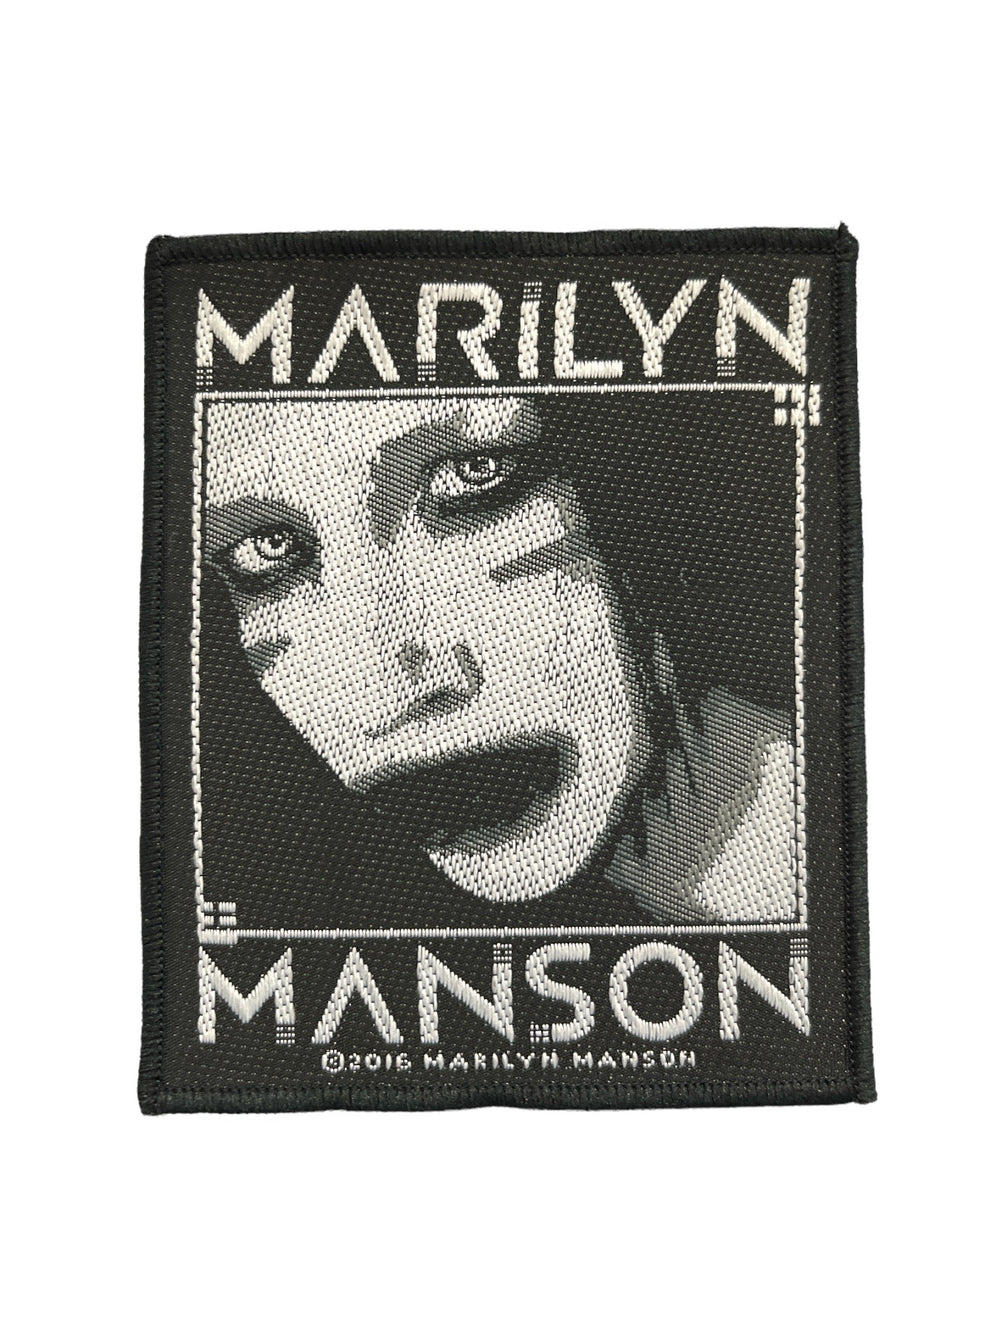 Marilyn Manson Villain Official Woven Patch Brand New